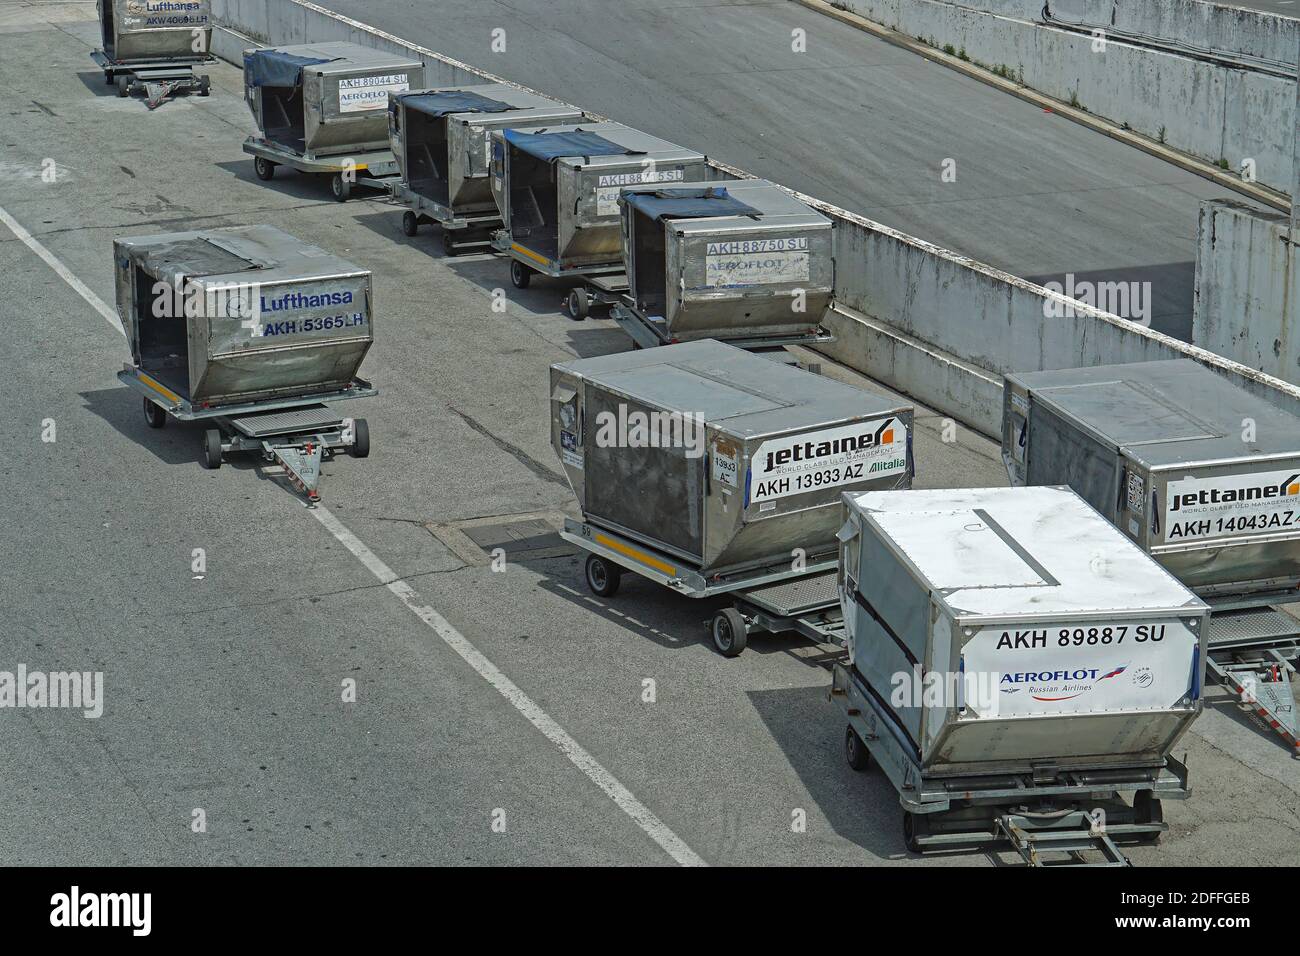 Belgrade, Serbia - May 01, 2015: Unit load devices cargo containers carts at airport Nikola Tesla, Surcin. Stock Photo